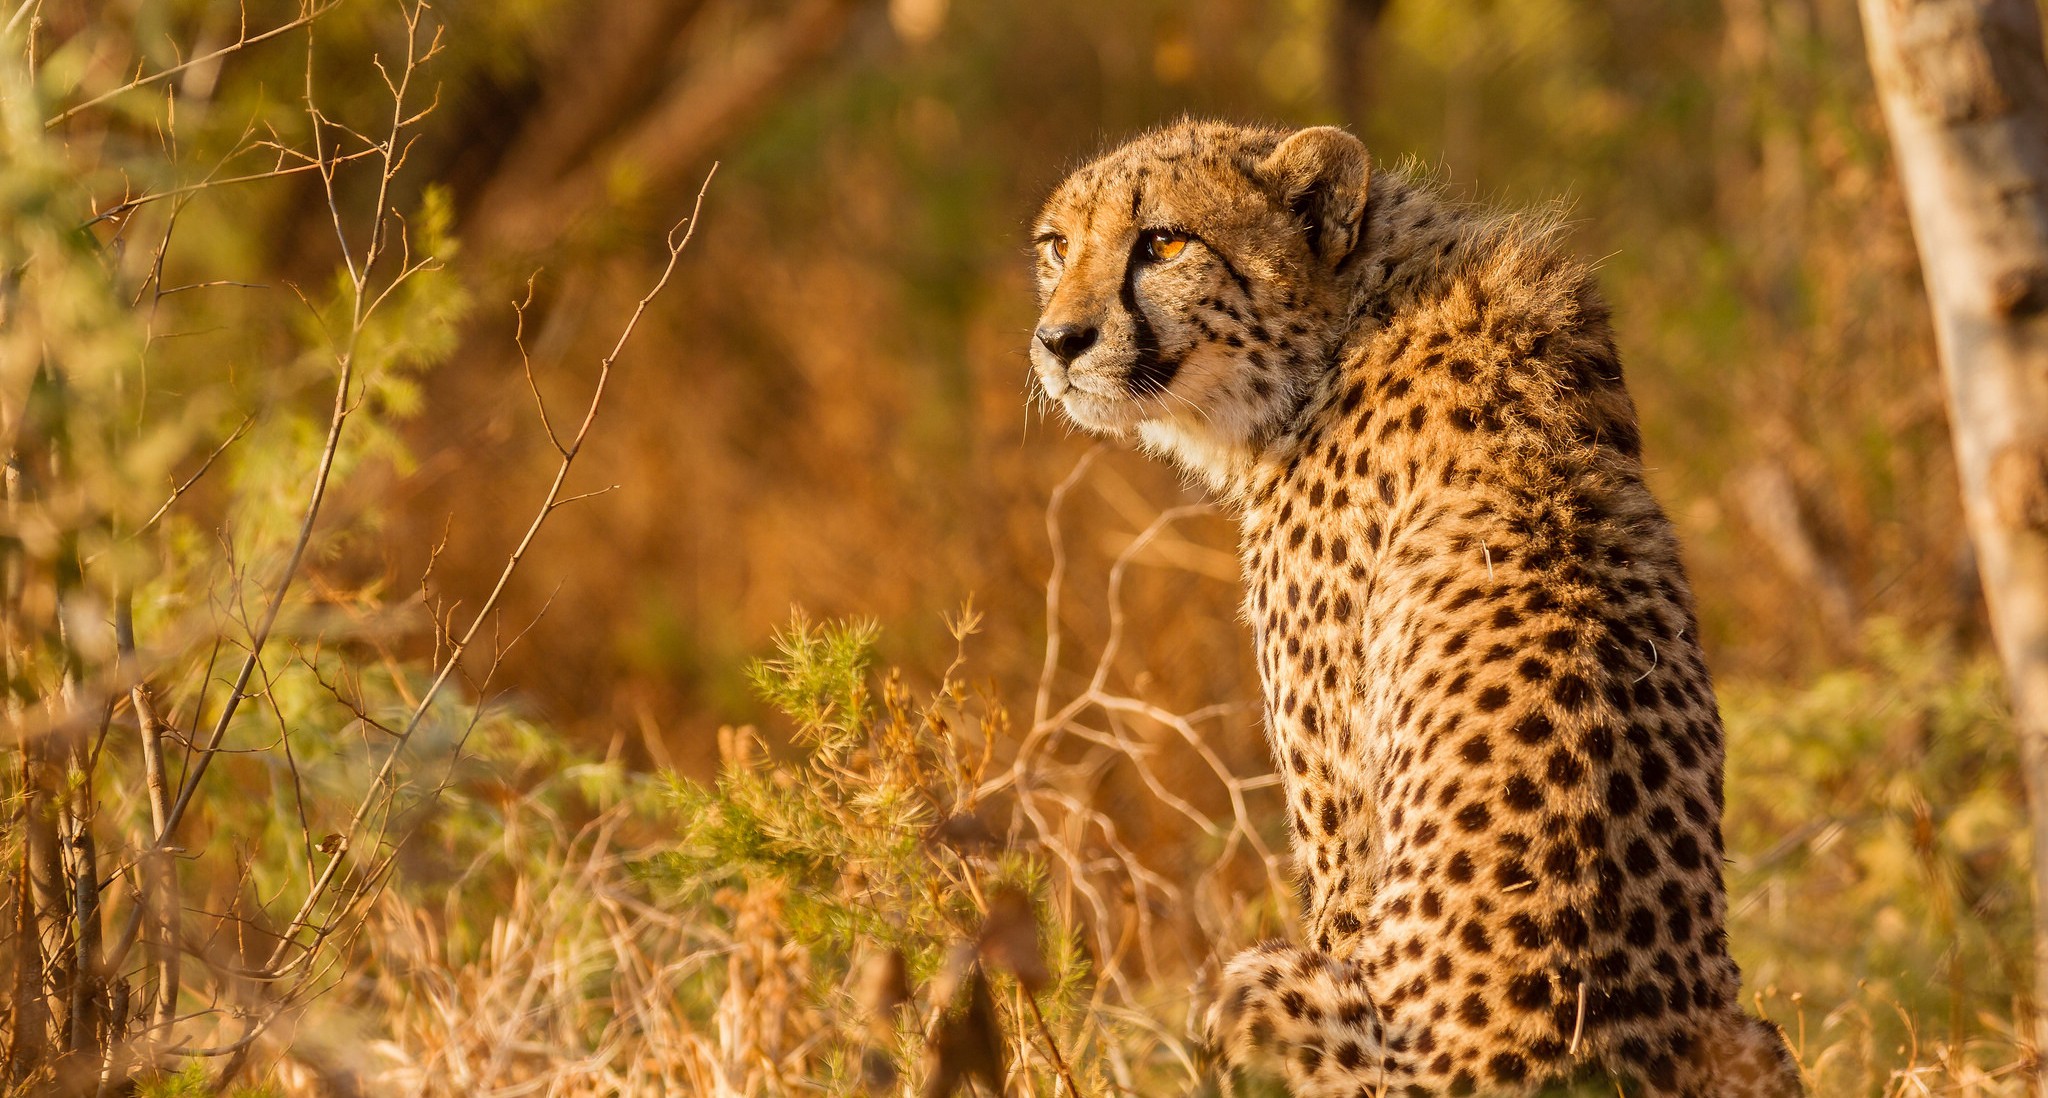 General 2048x1098 animals feline mammals cheetah